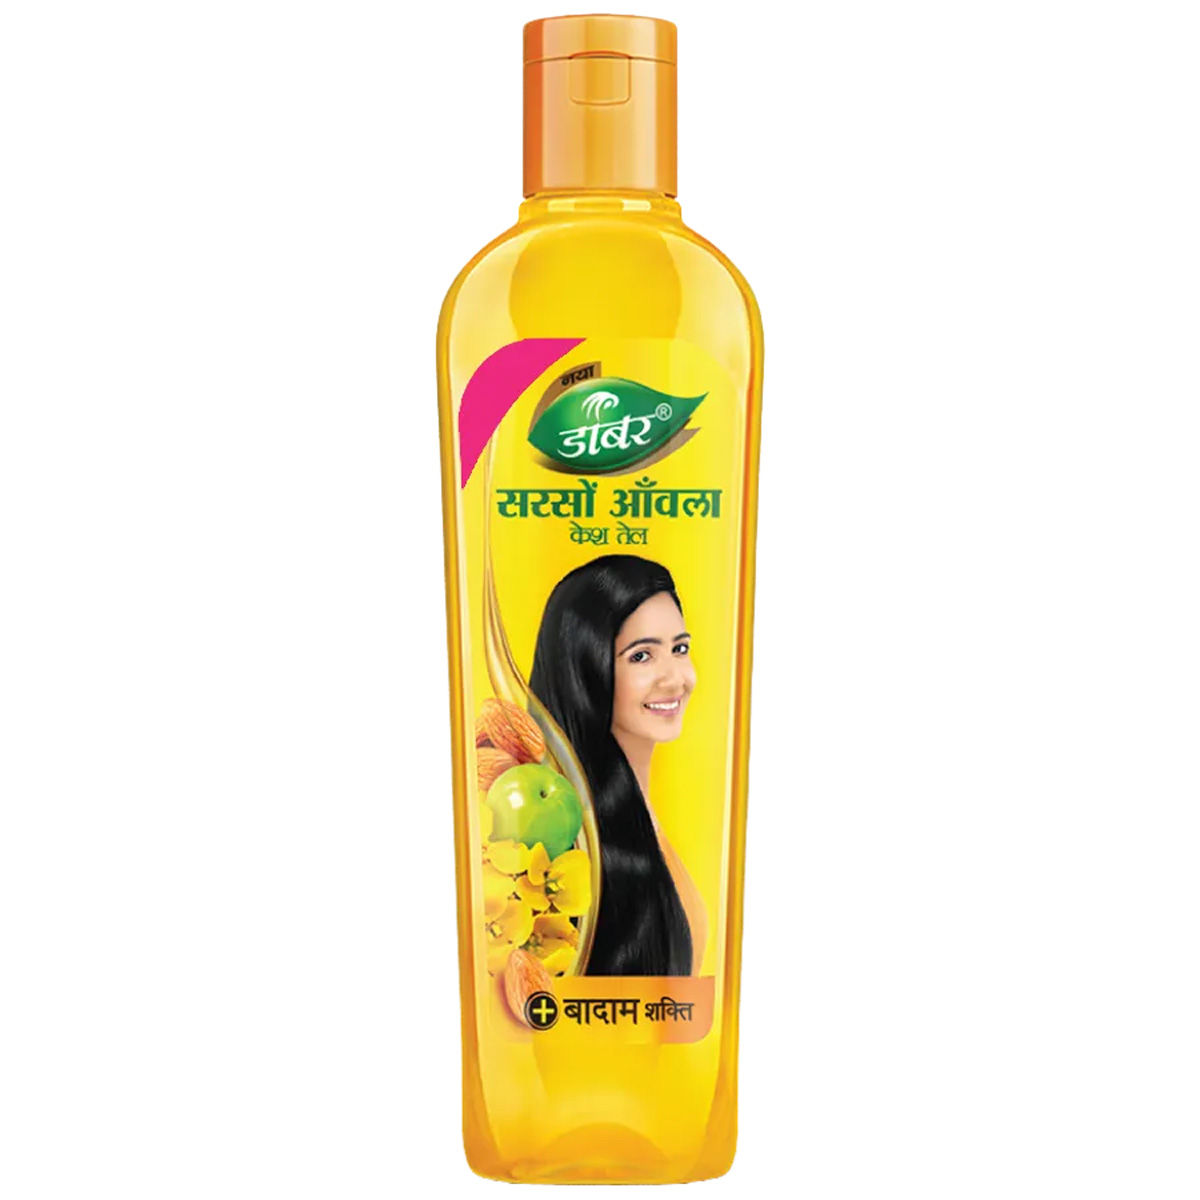 Dabur Amla Hair Oil, 180 ml Price, Uses, Side Effects, Composition - Apollo  Pharmacy